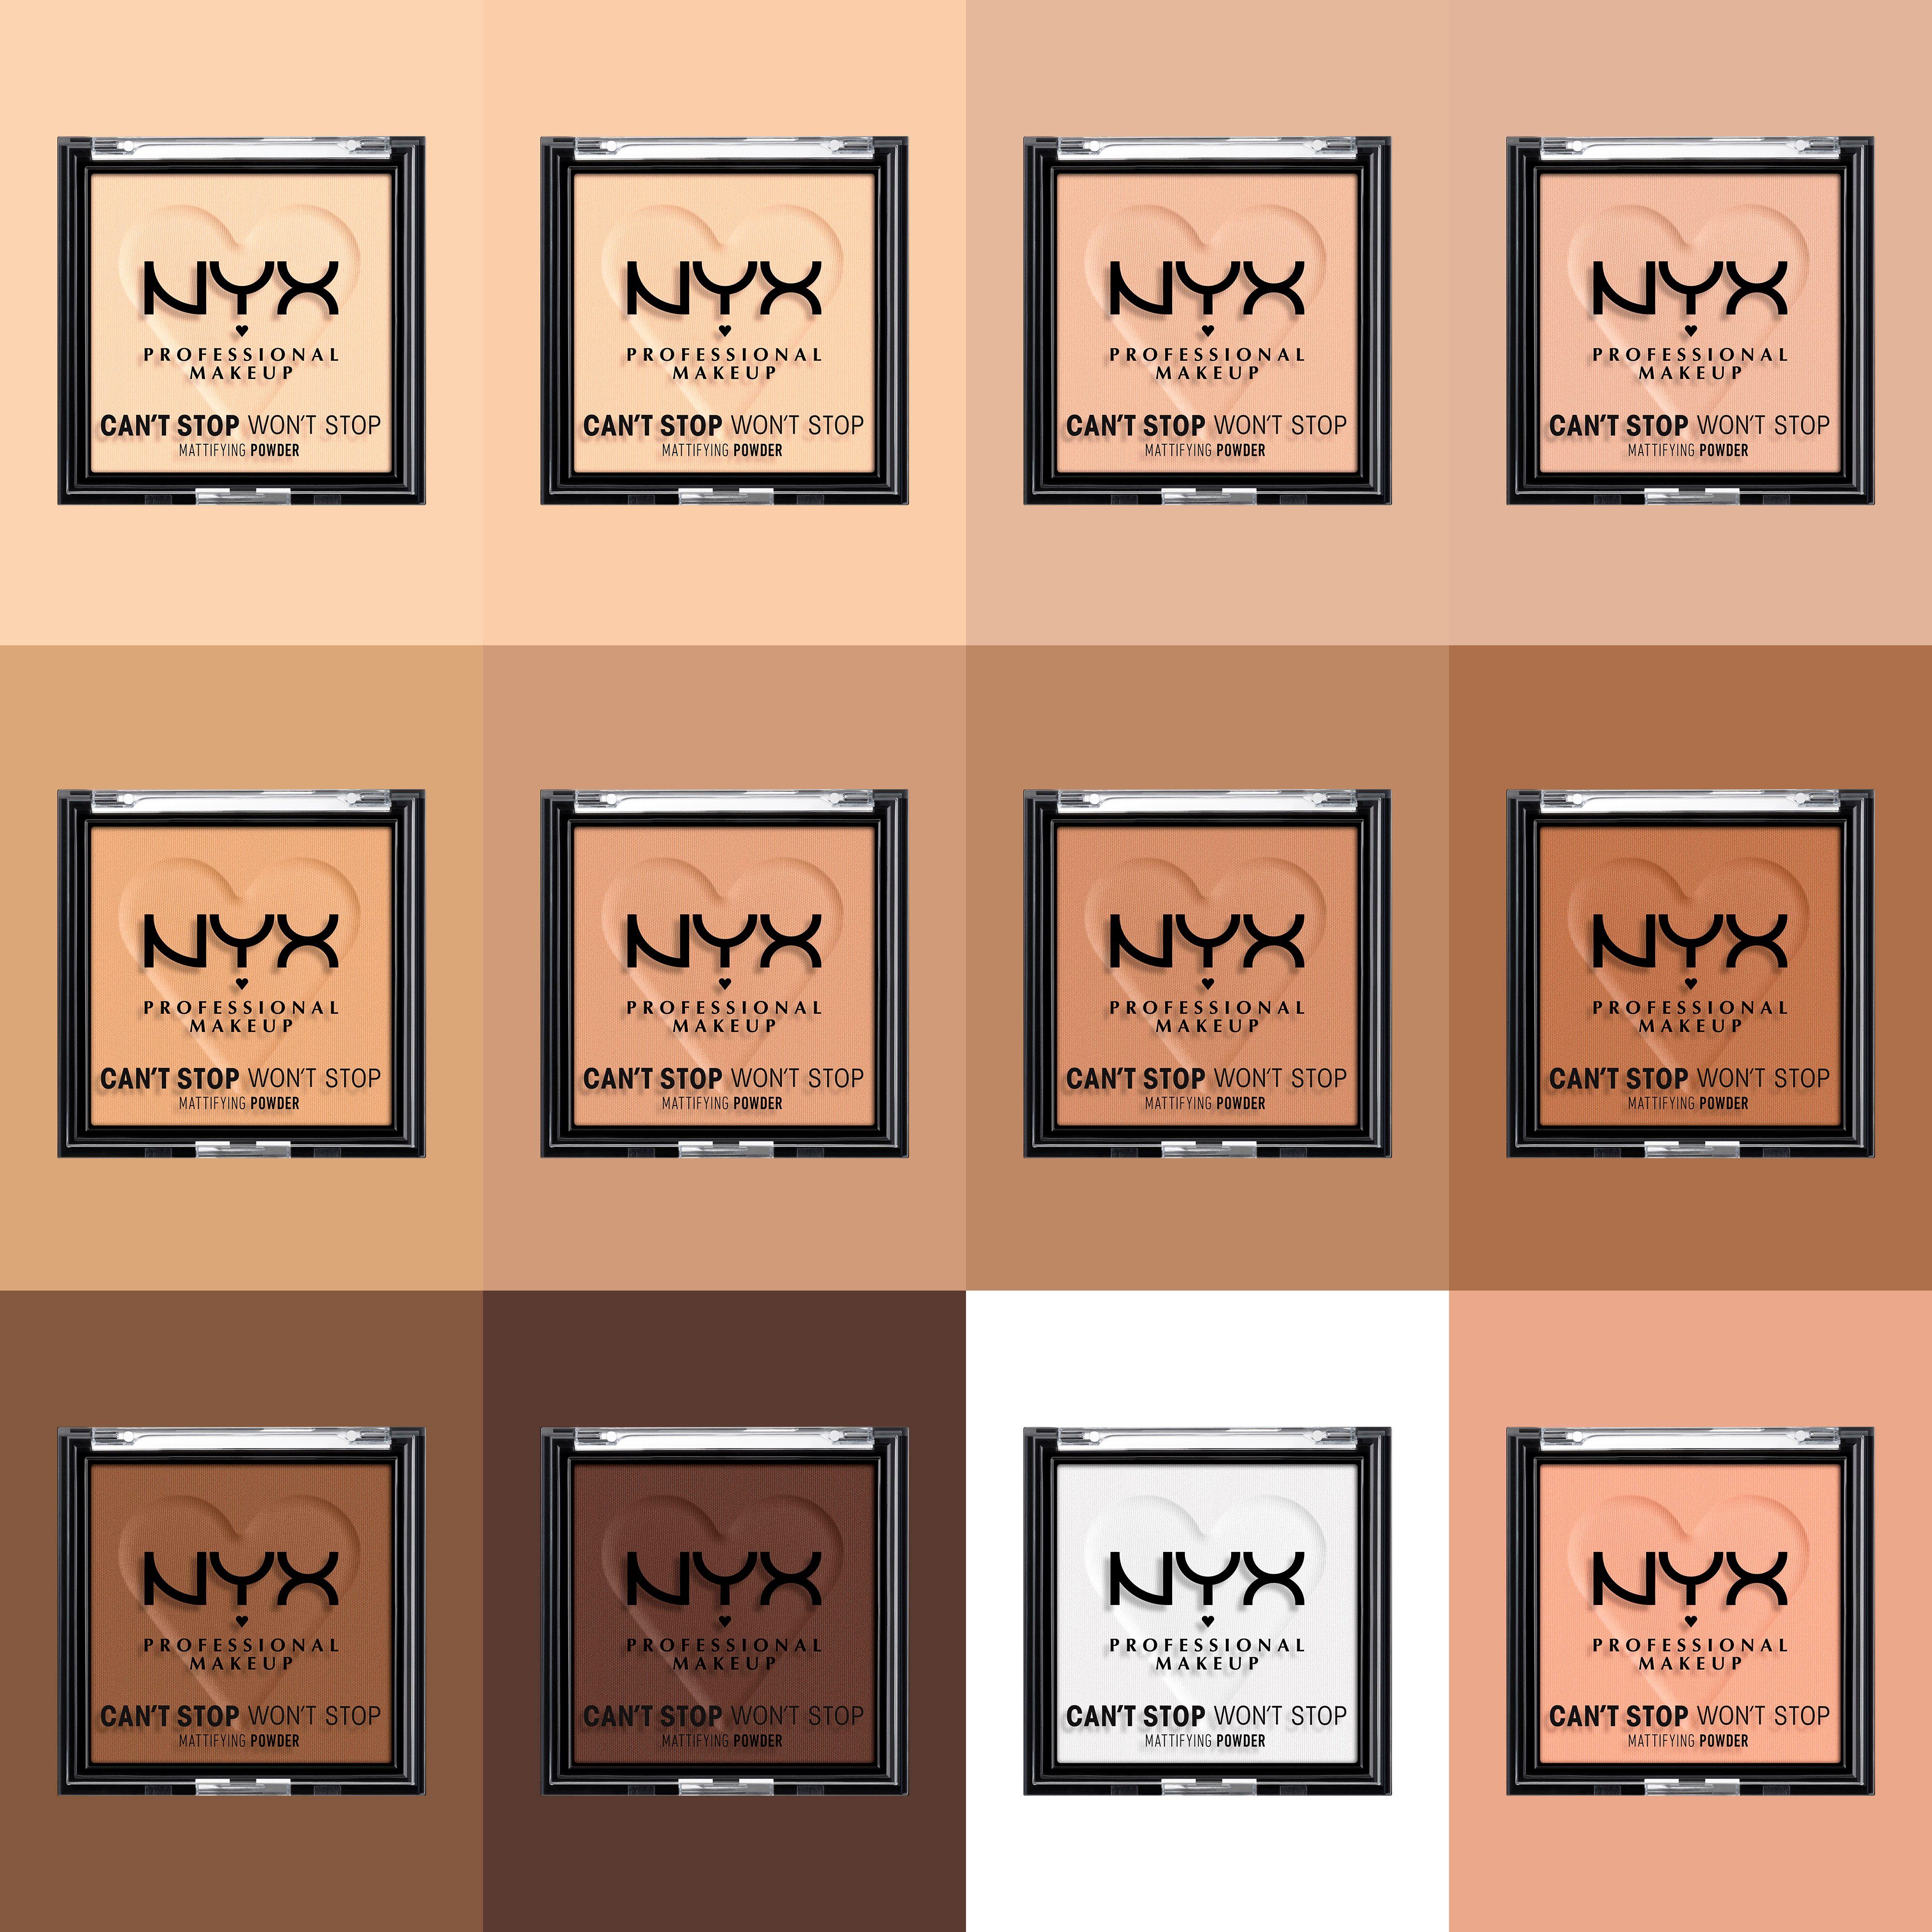 NYX Puder Professional Light Makeup 02 CSWS Powder Mattifying